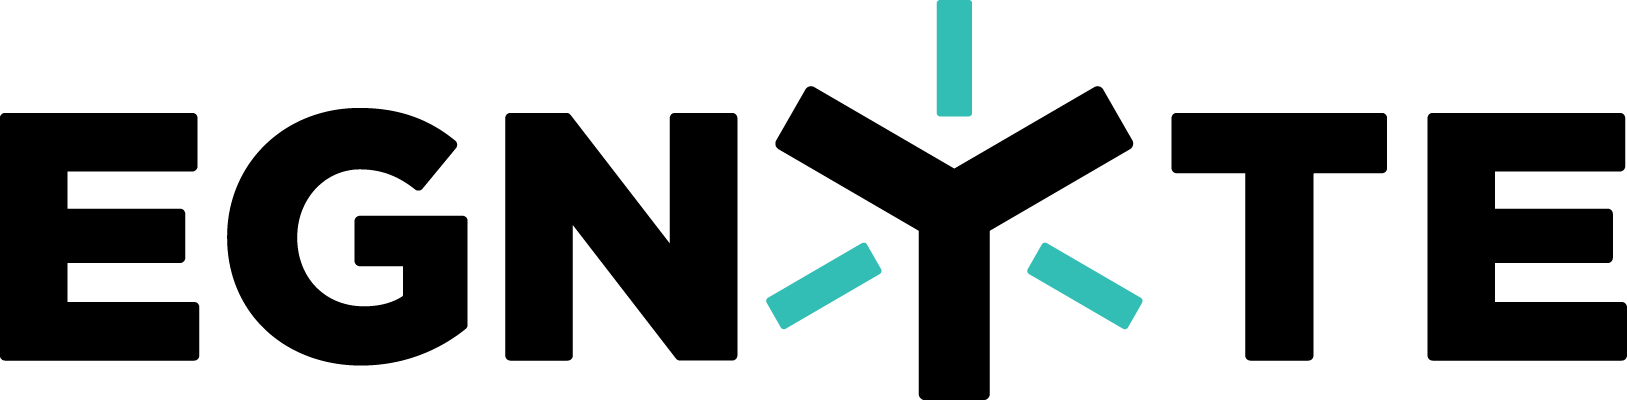 Egnyte_logo